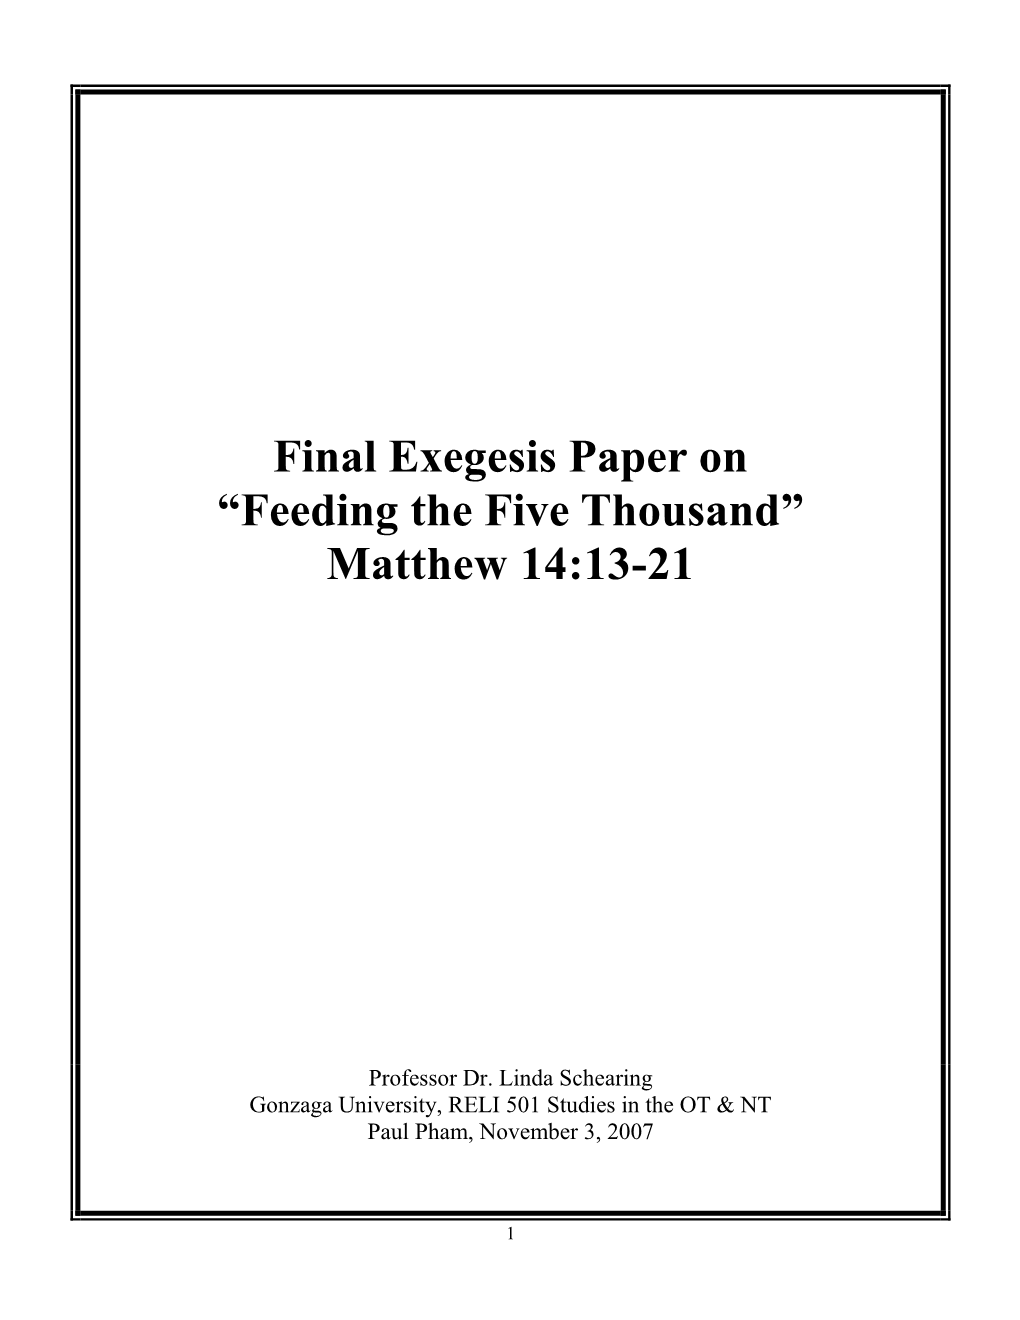 Feeding the Five Thousand” Matthew 14:13-21